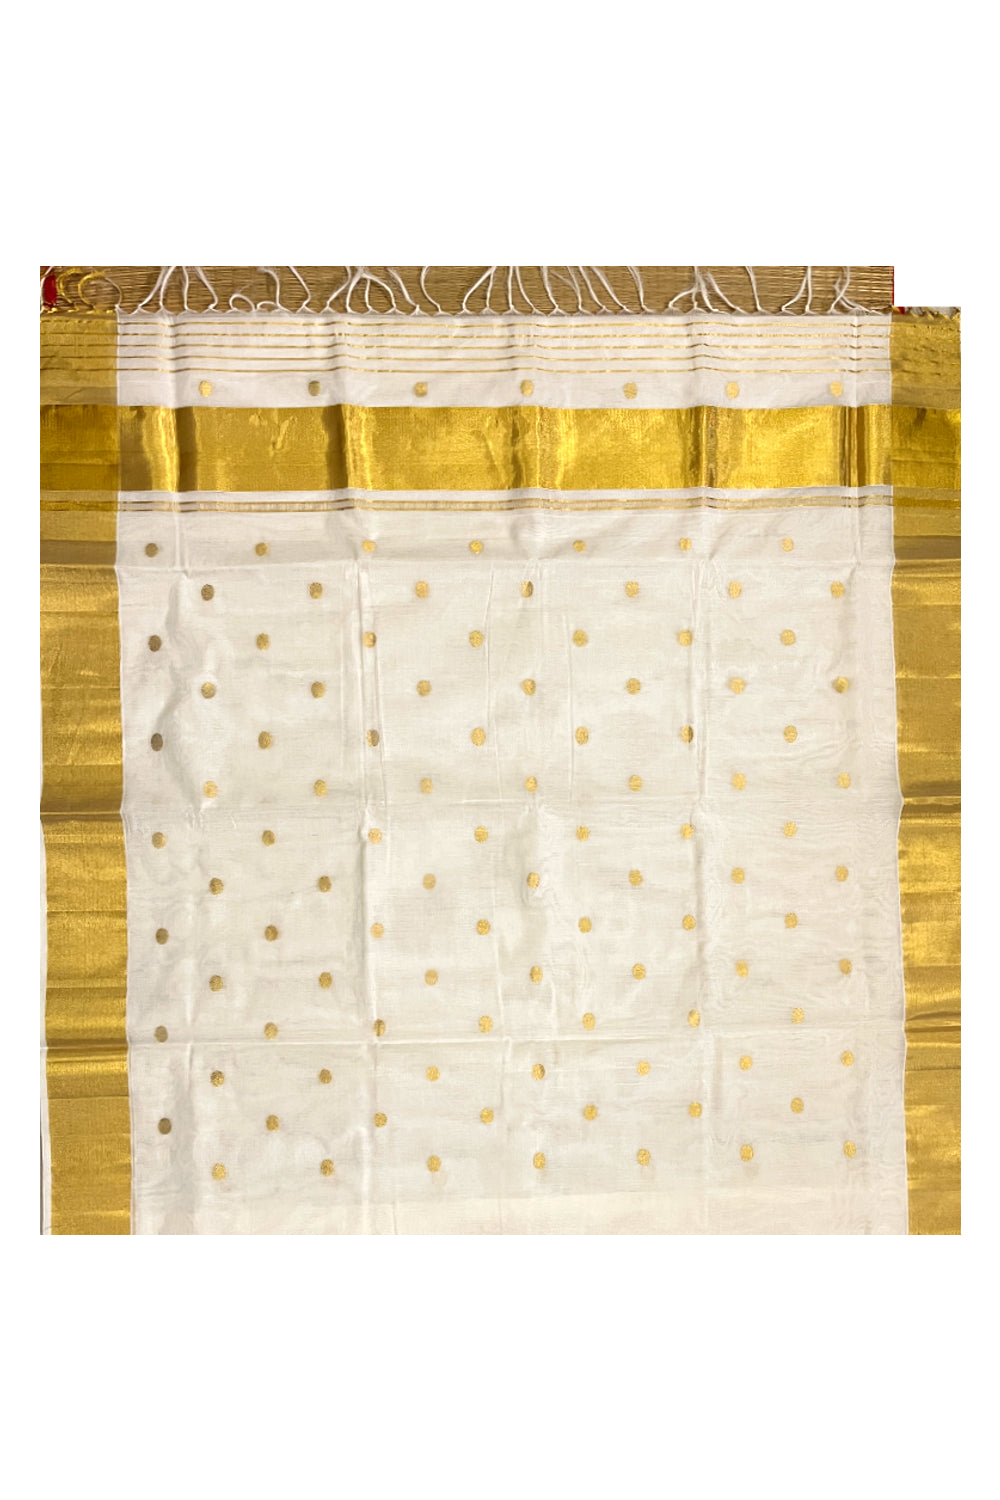 Southloom Premium Handloom Cotton Kerala Saree with Golden Polka works on Body